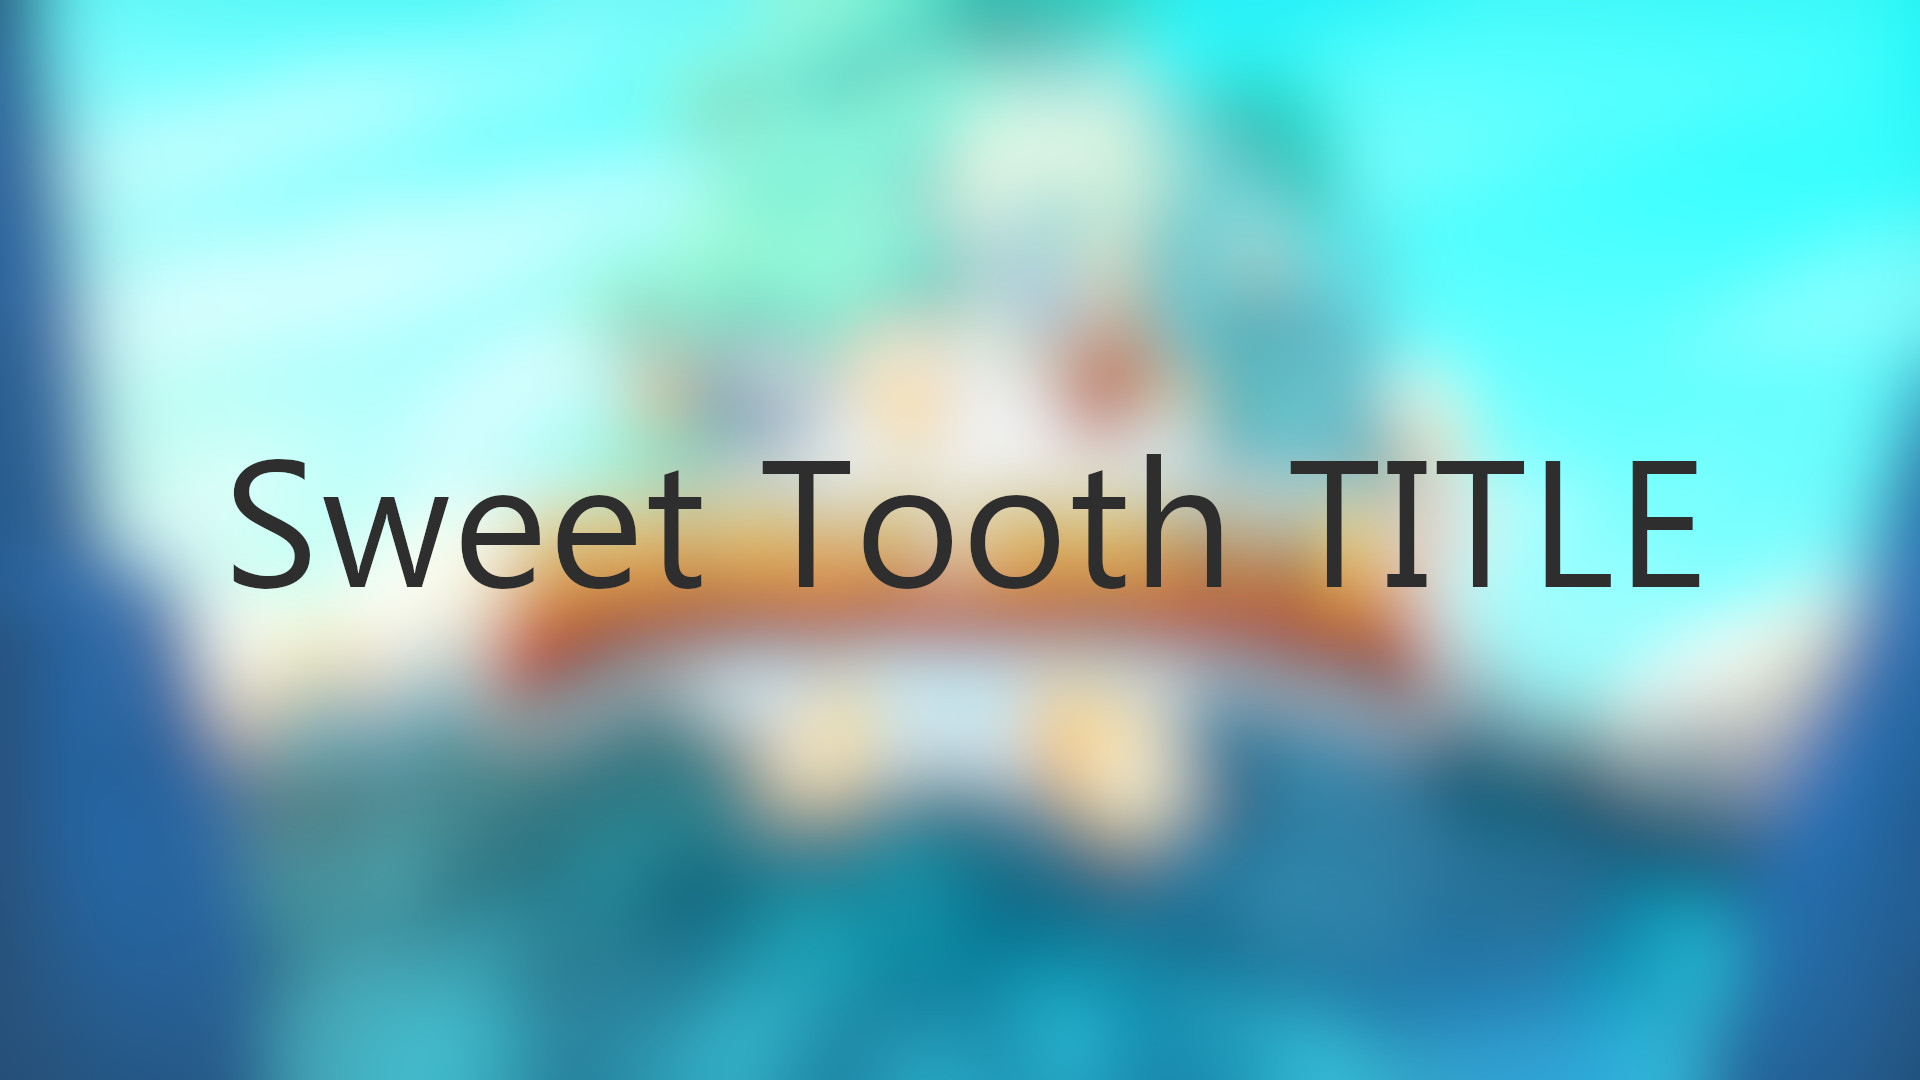 Brawlhalla - Sweet Tooth Title DLC CD Key, $1.12